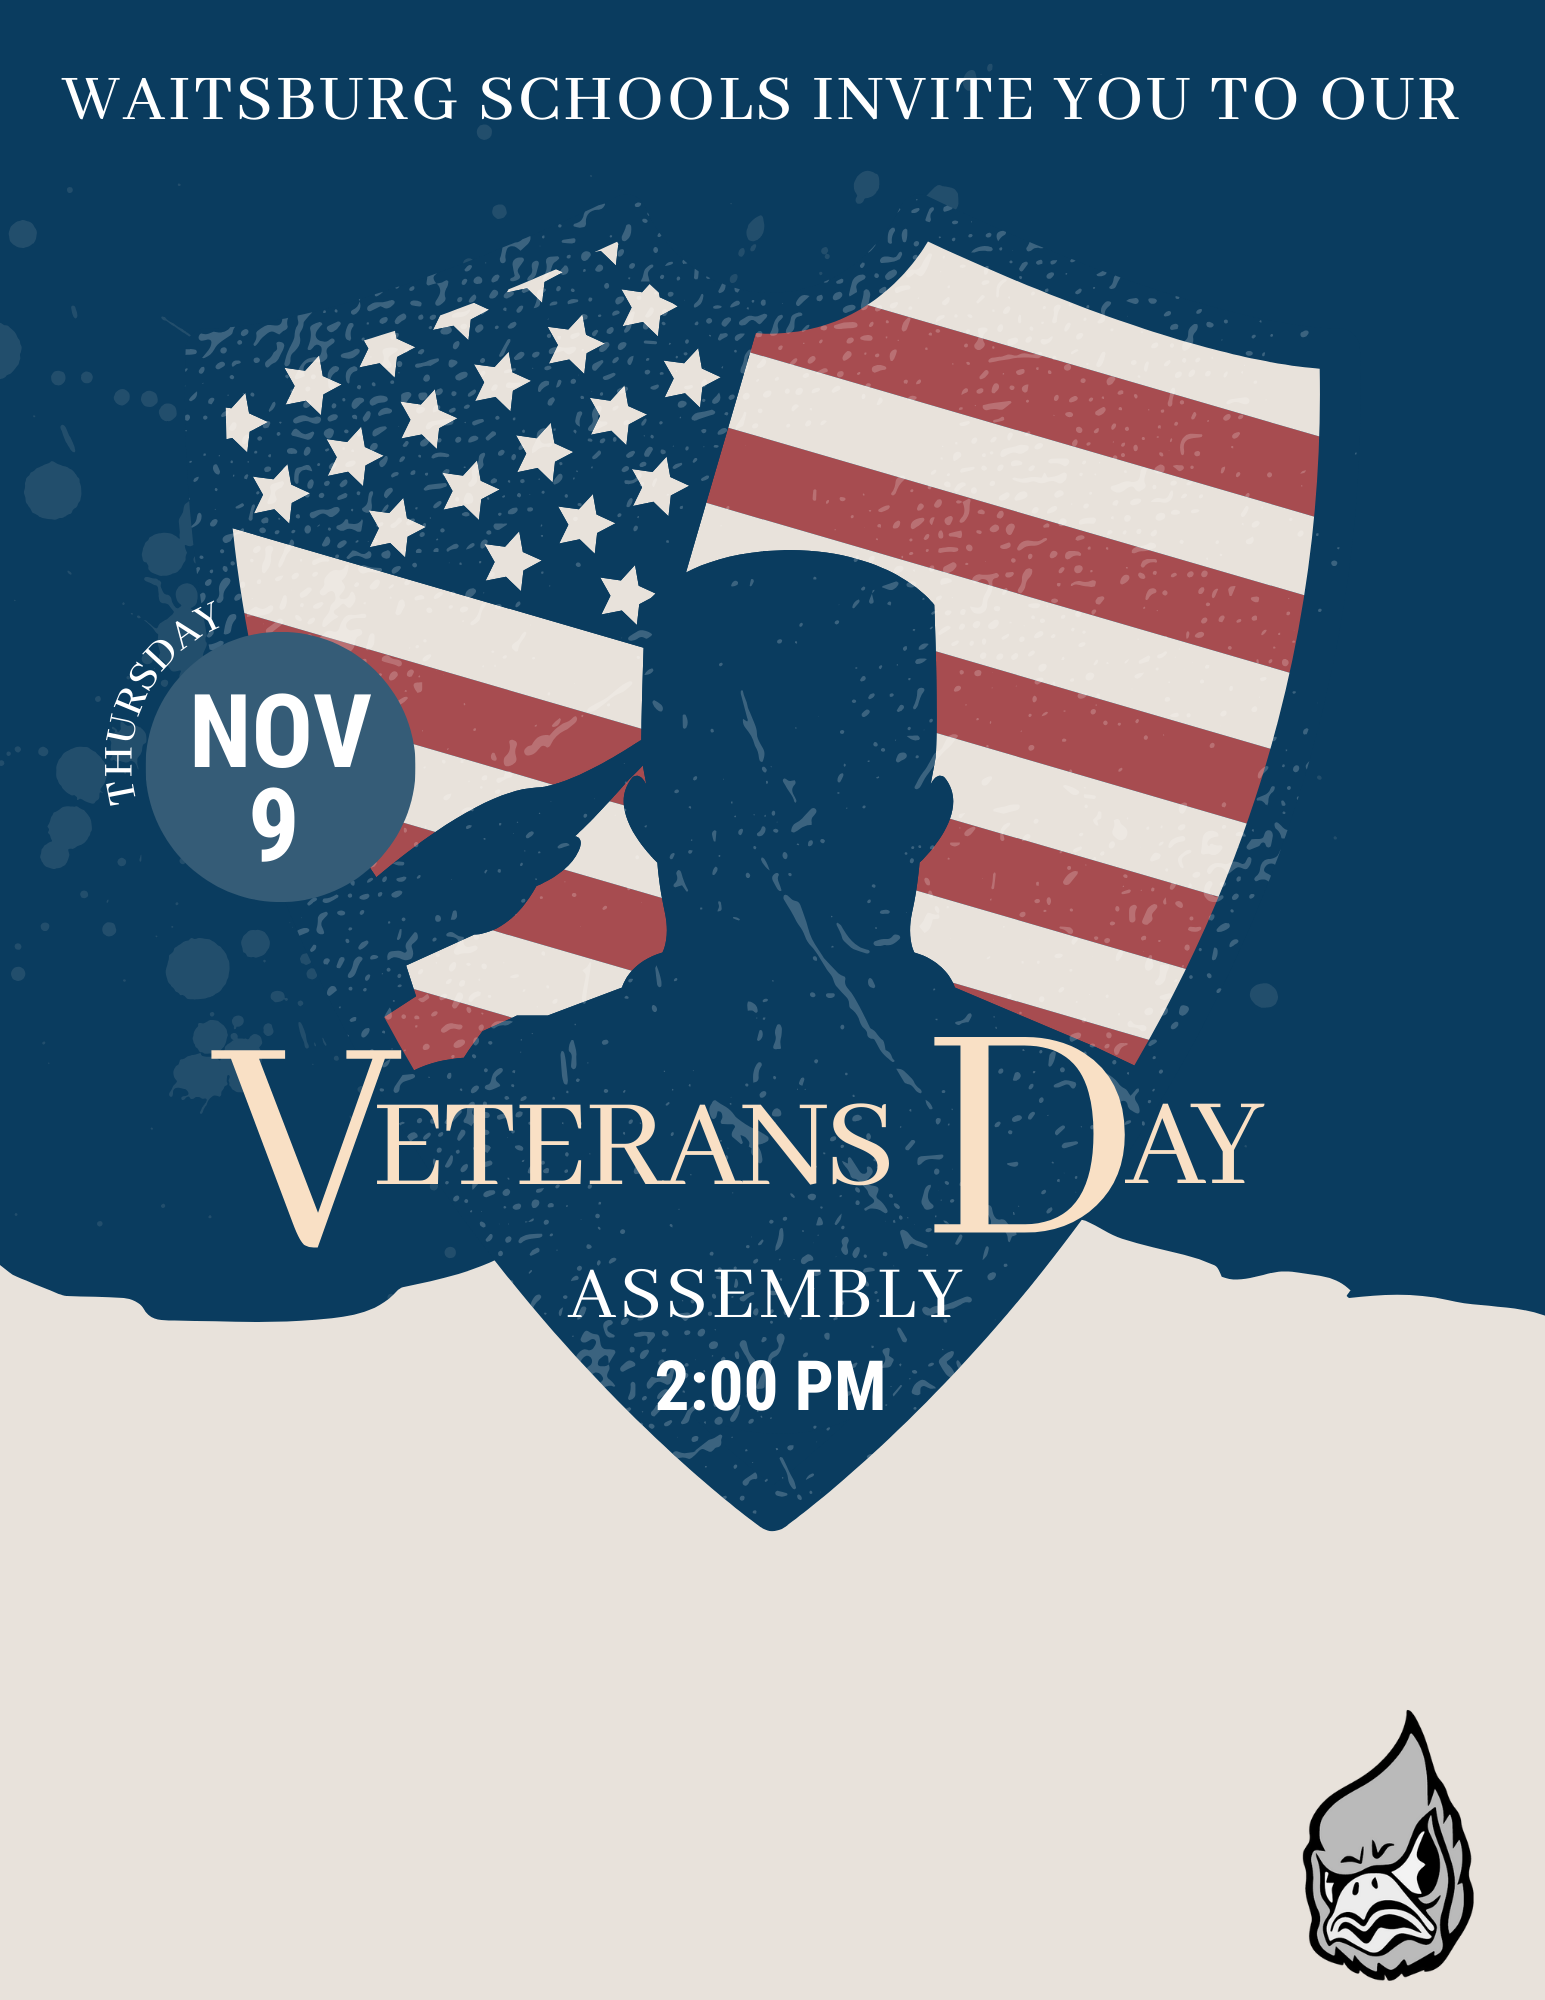 Veterans day assembly November 9 at 2PM